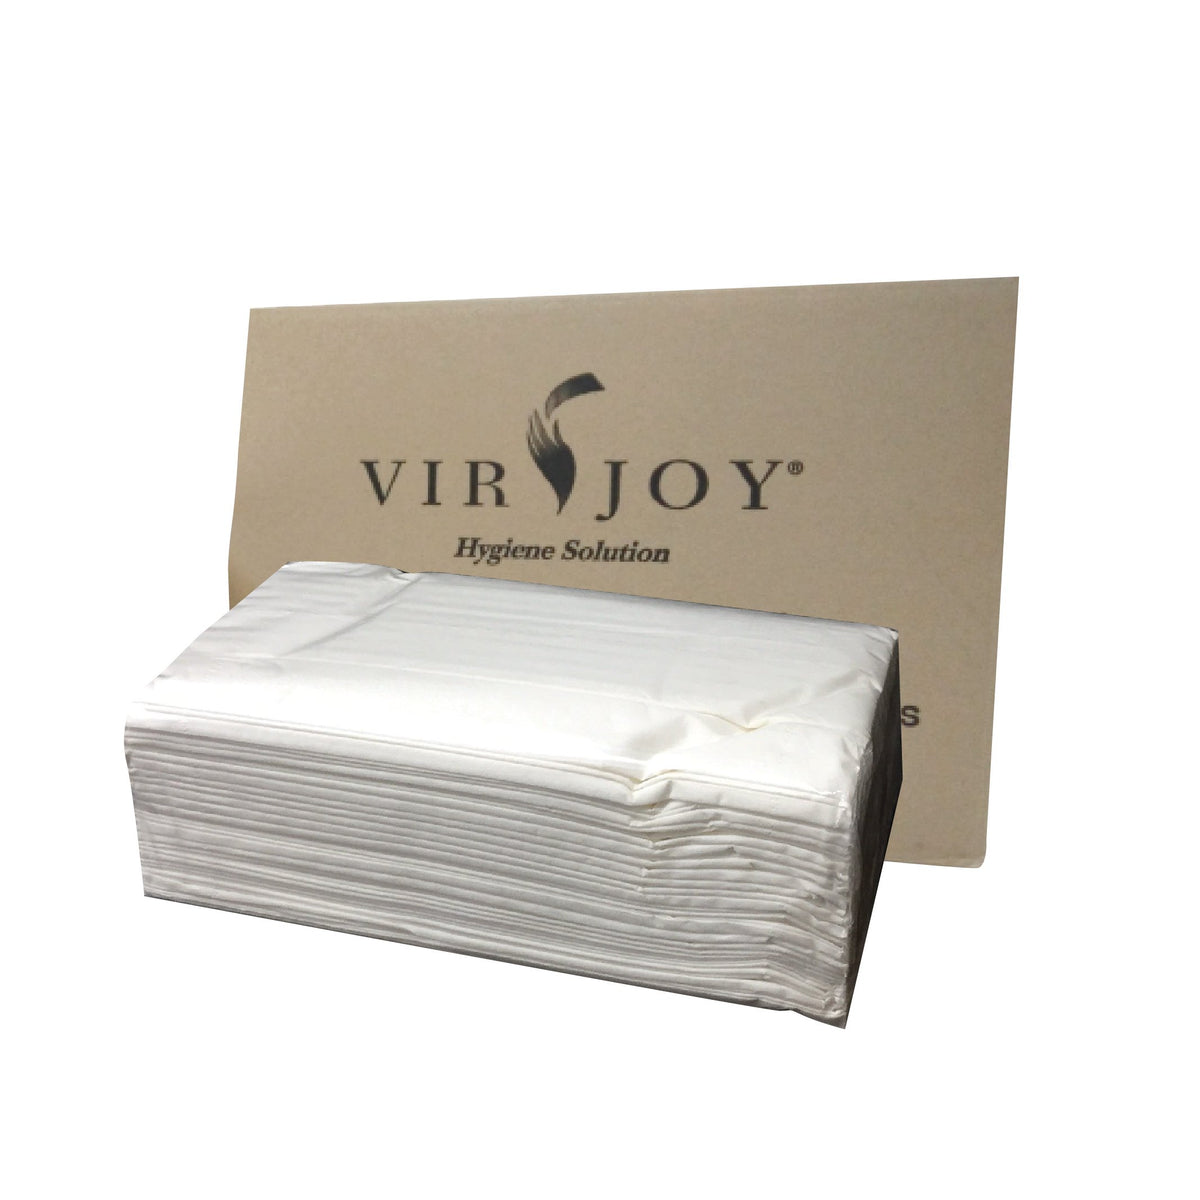 Virjoy Hygiene Solution Inter-Fold Tissue 60 Packs/Case